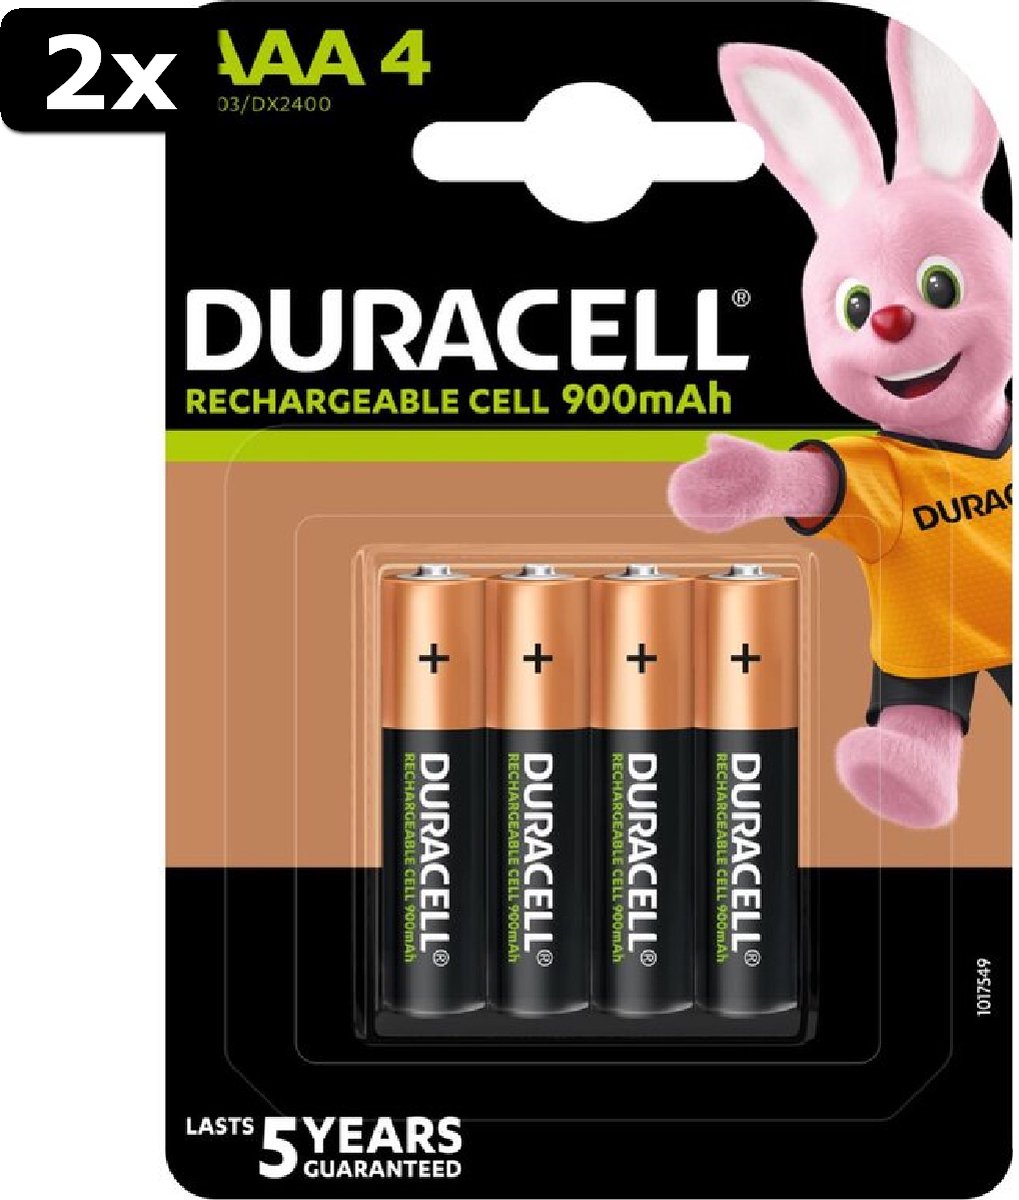 2x Duracell Rechargeable AAA 900mAh batterijen - 4 stuks